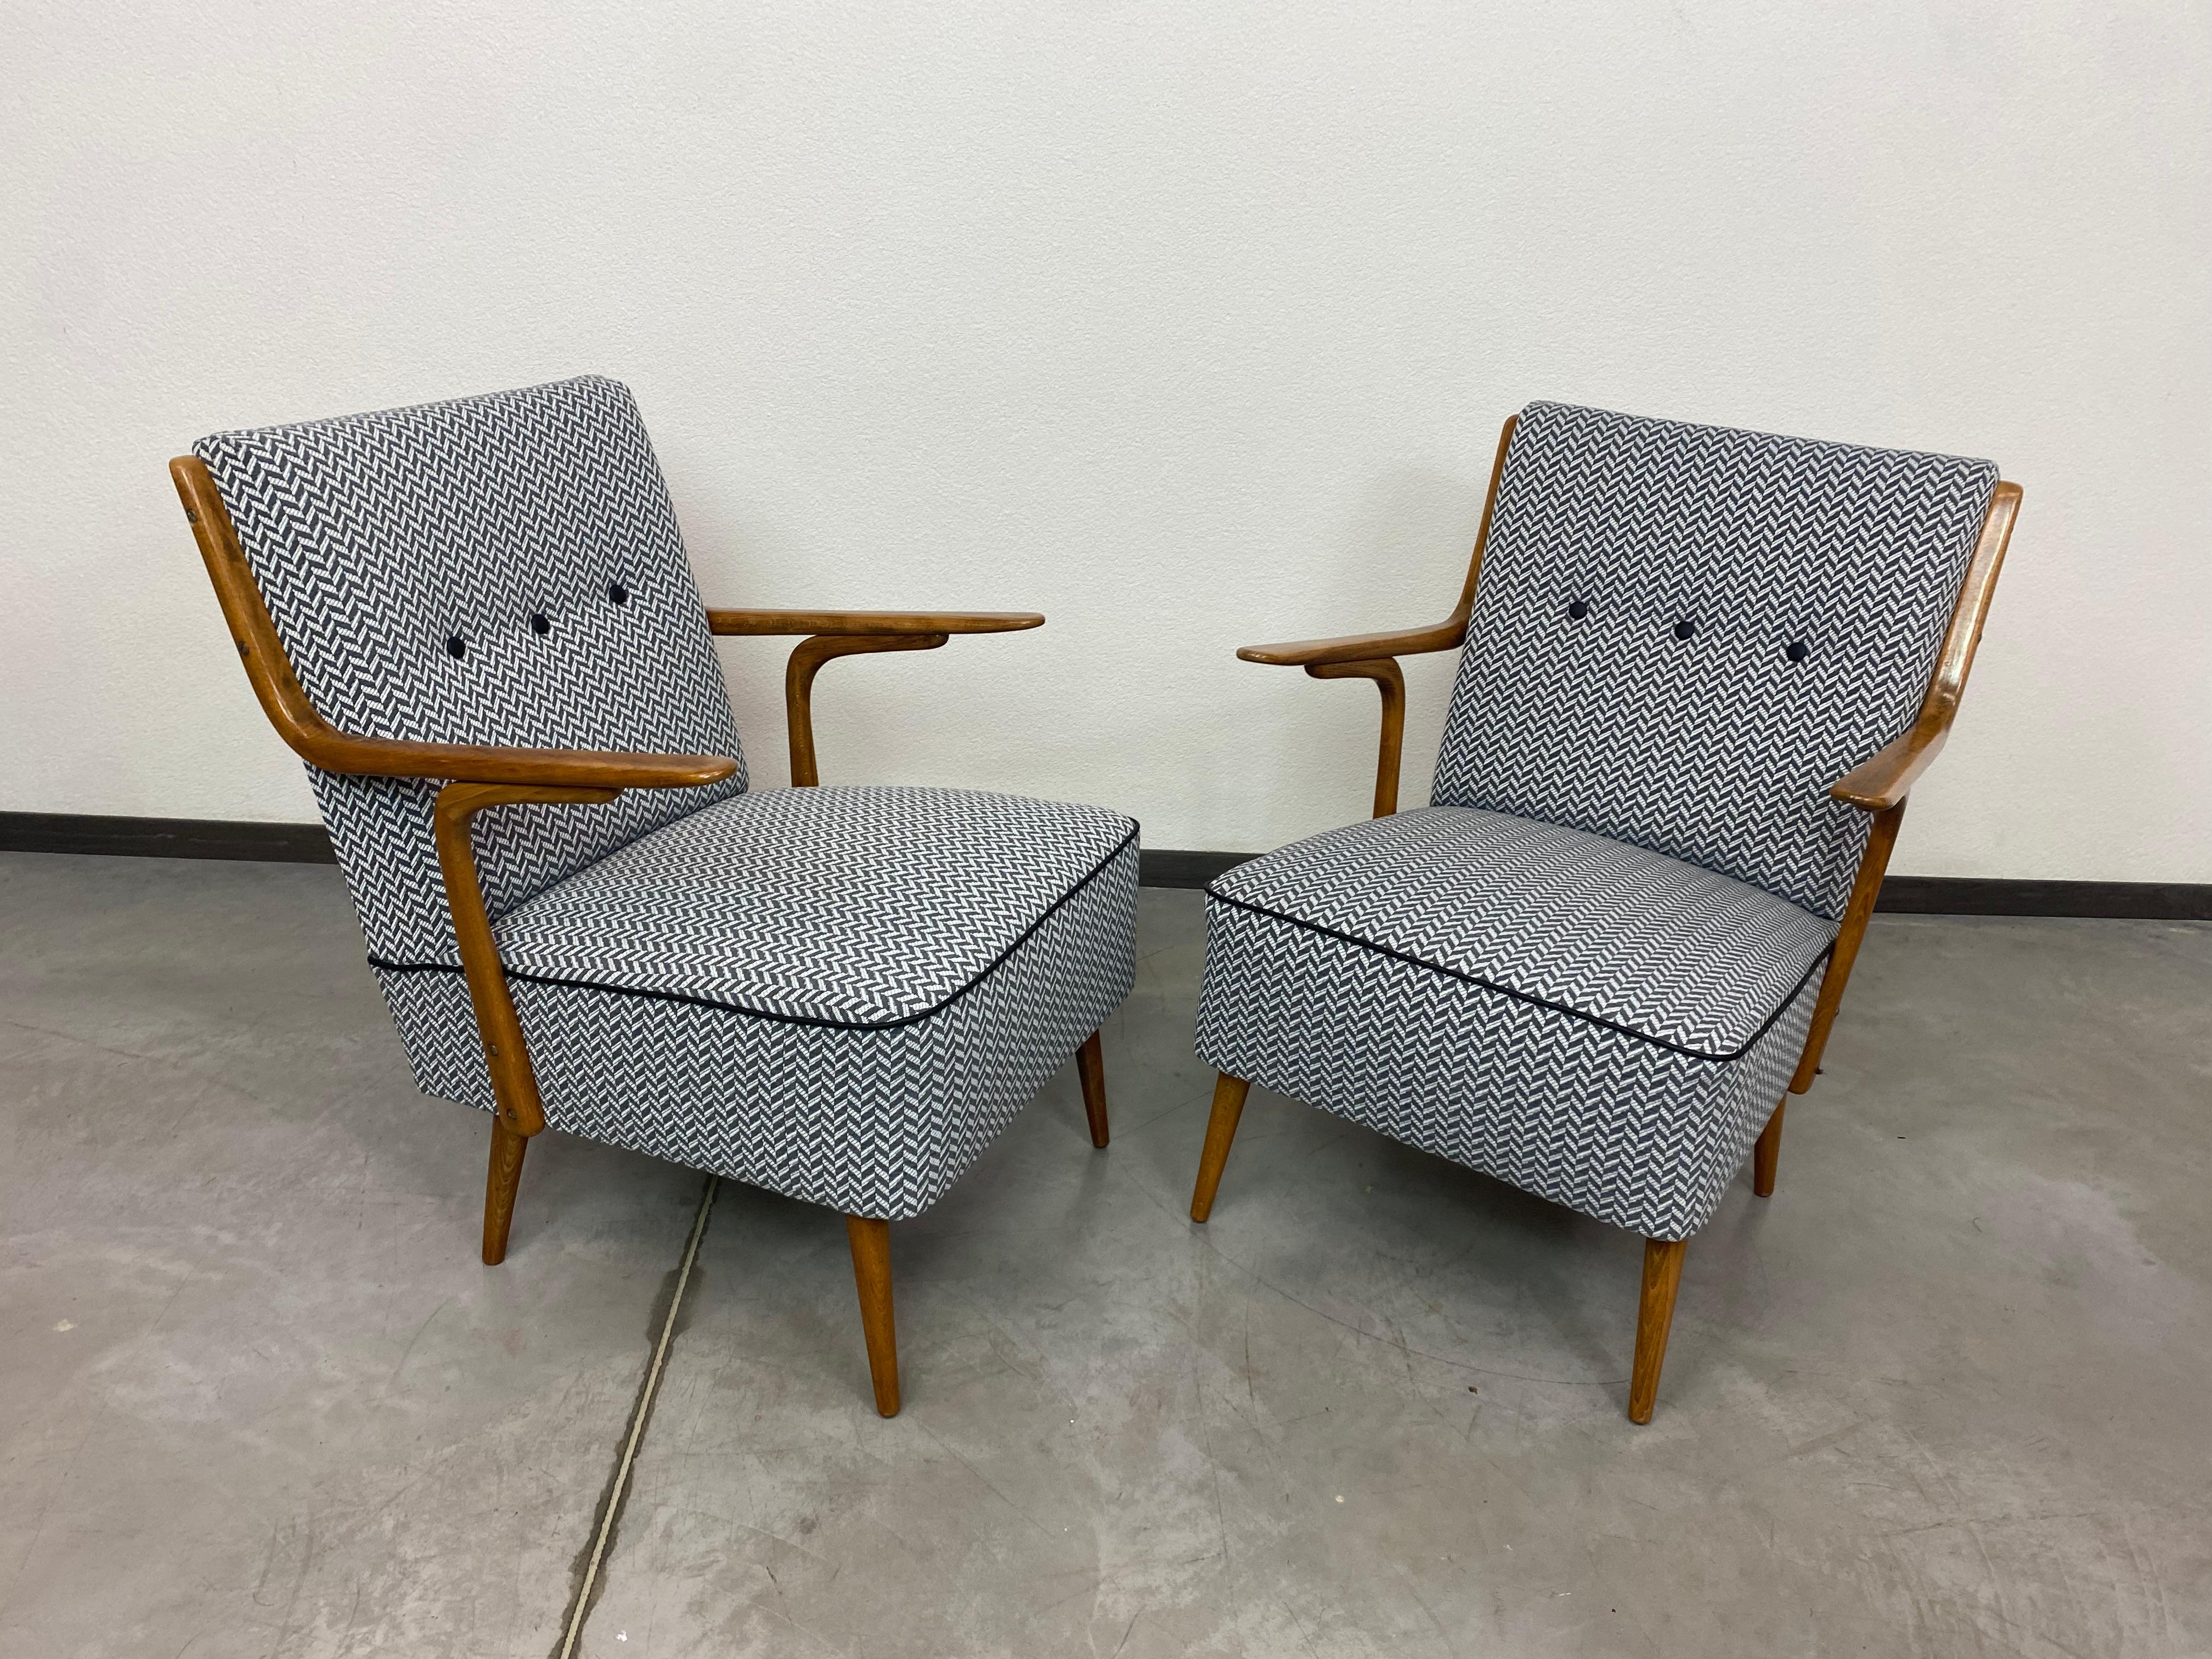 Hungarian Midncenury design armchairs by Jozsef Peresztegi for Thonet